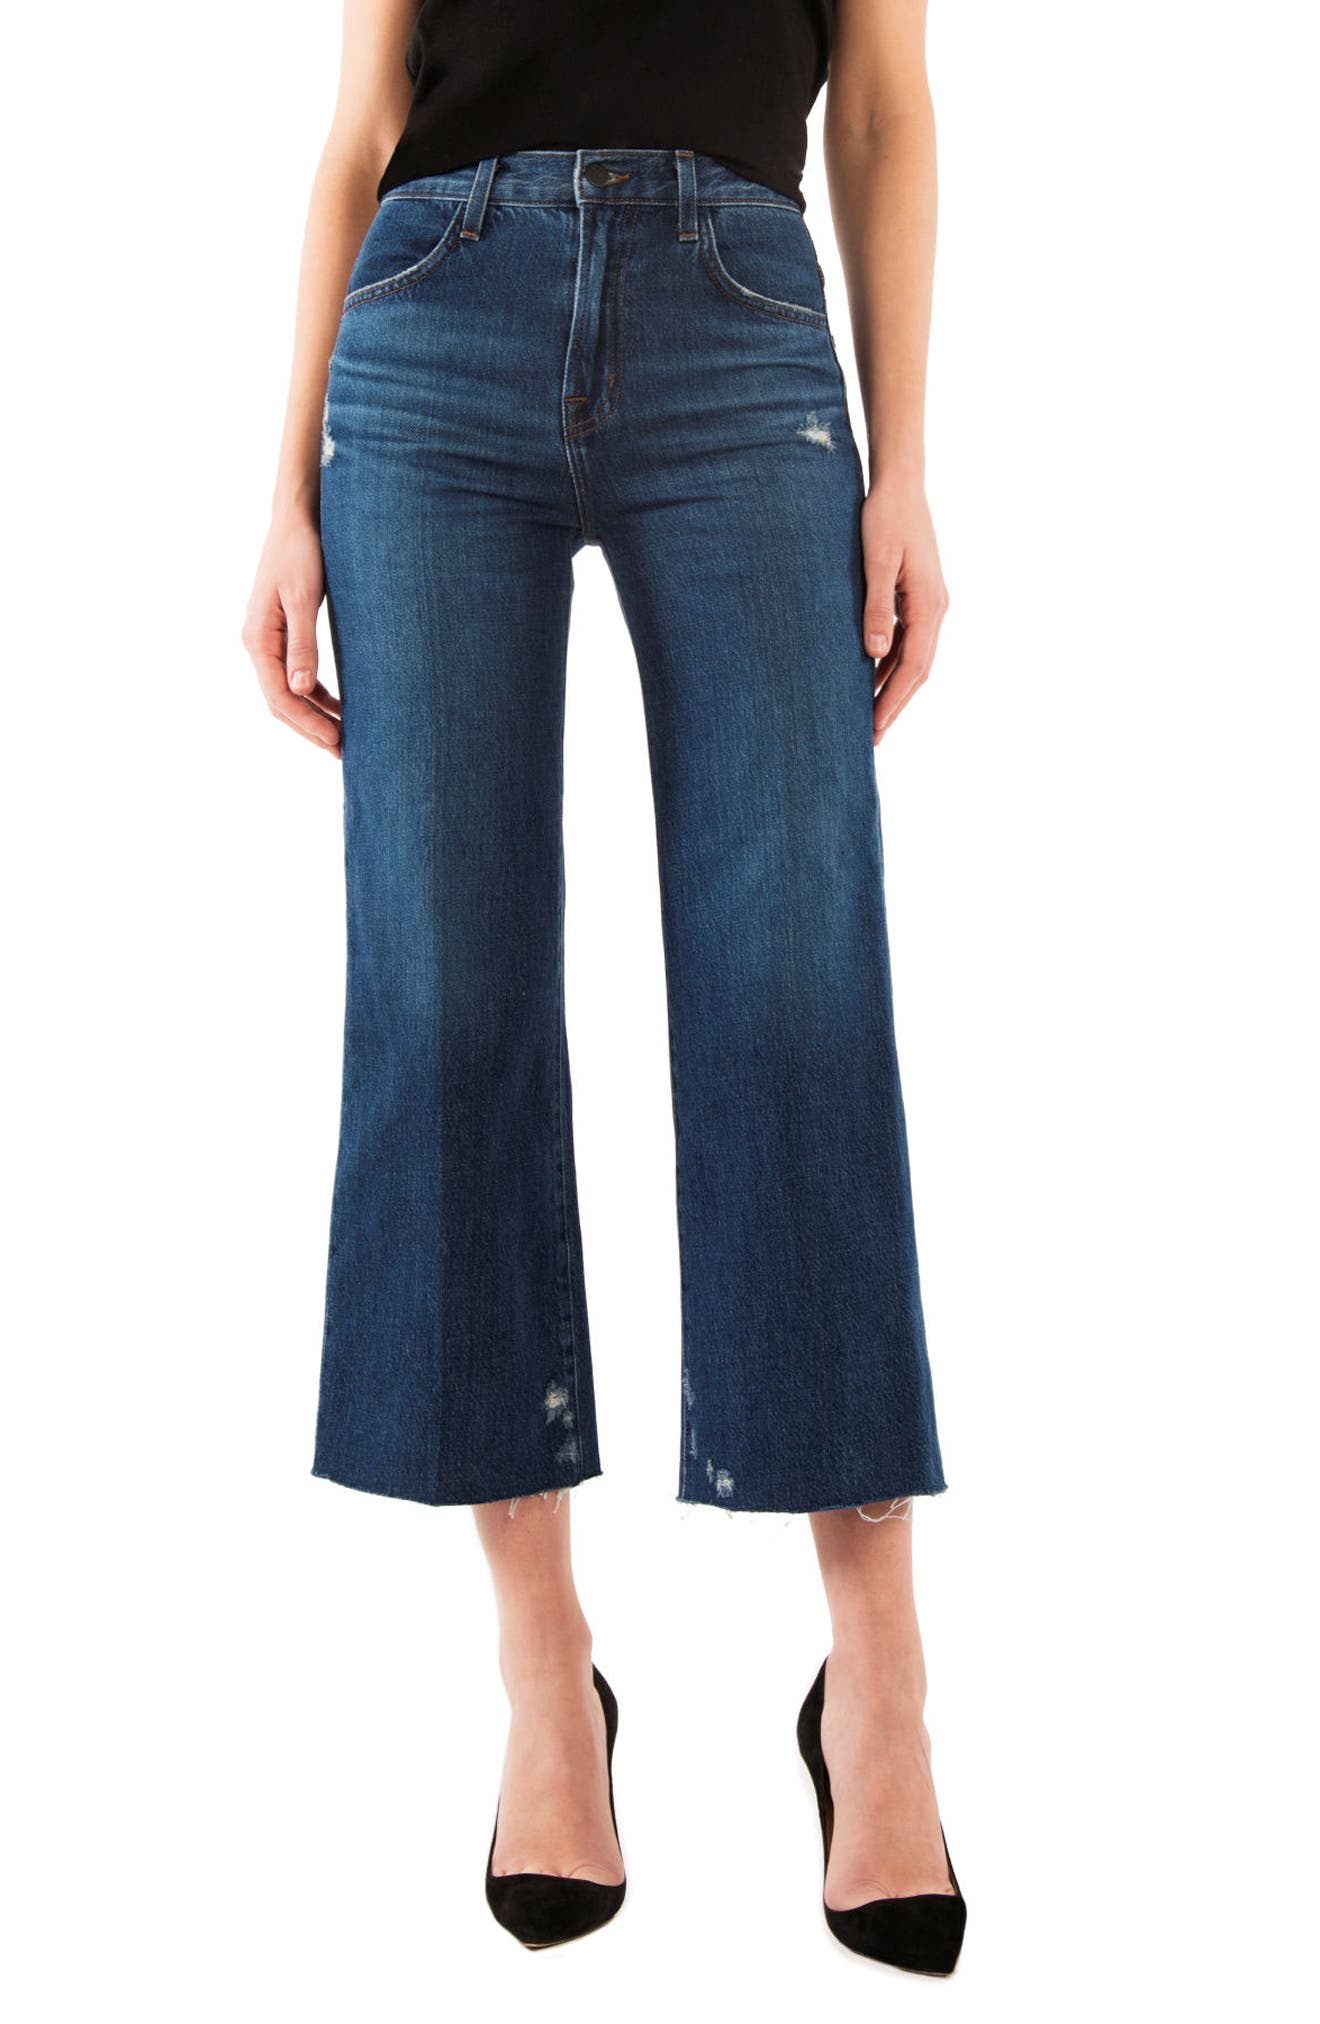 j brand wide leg jeans